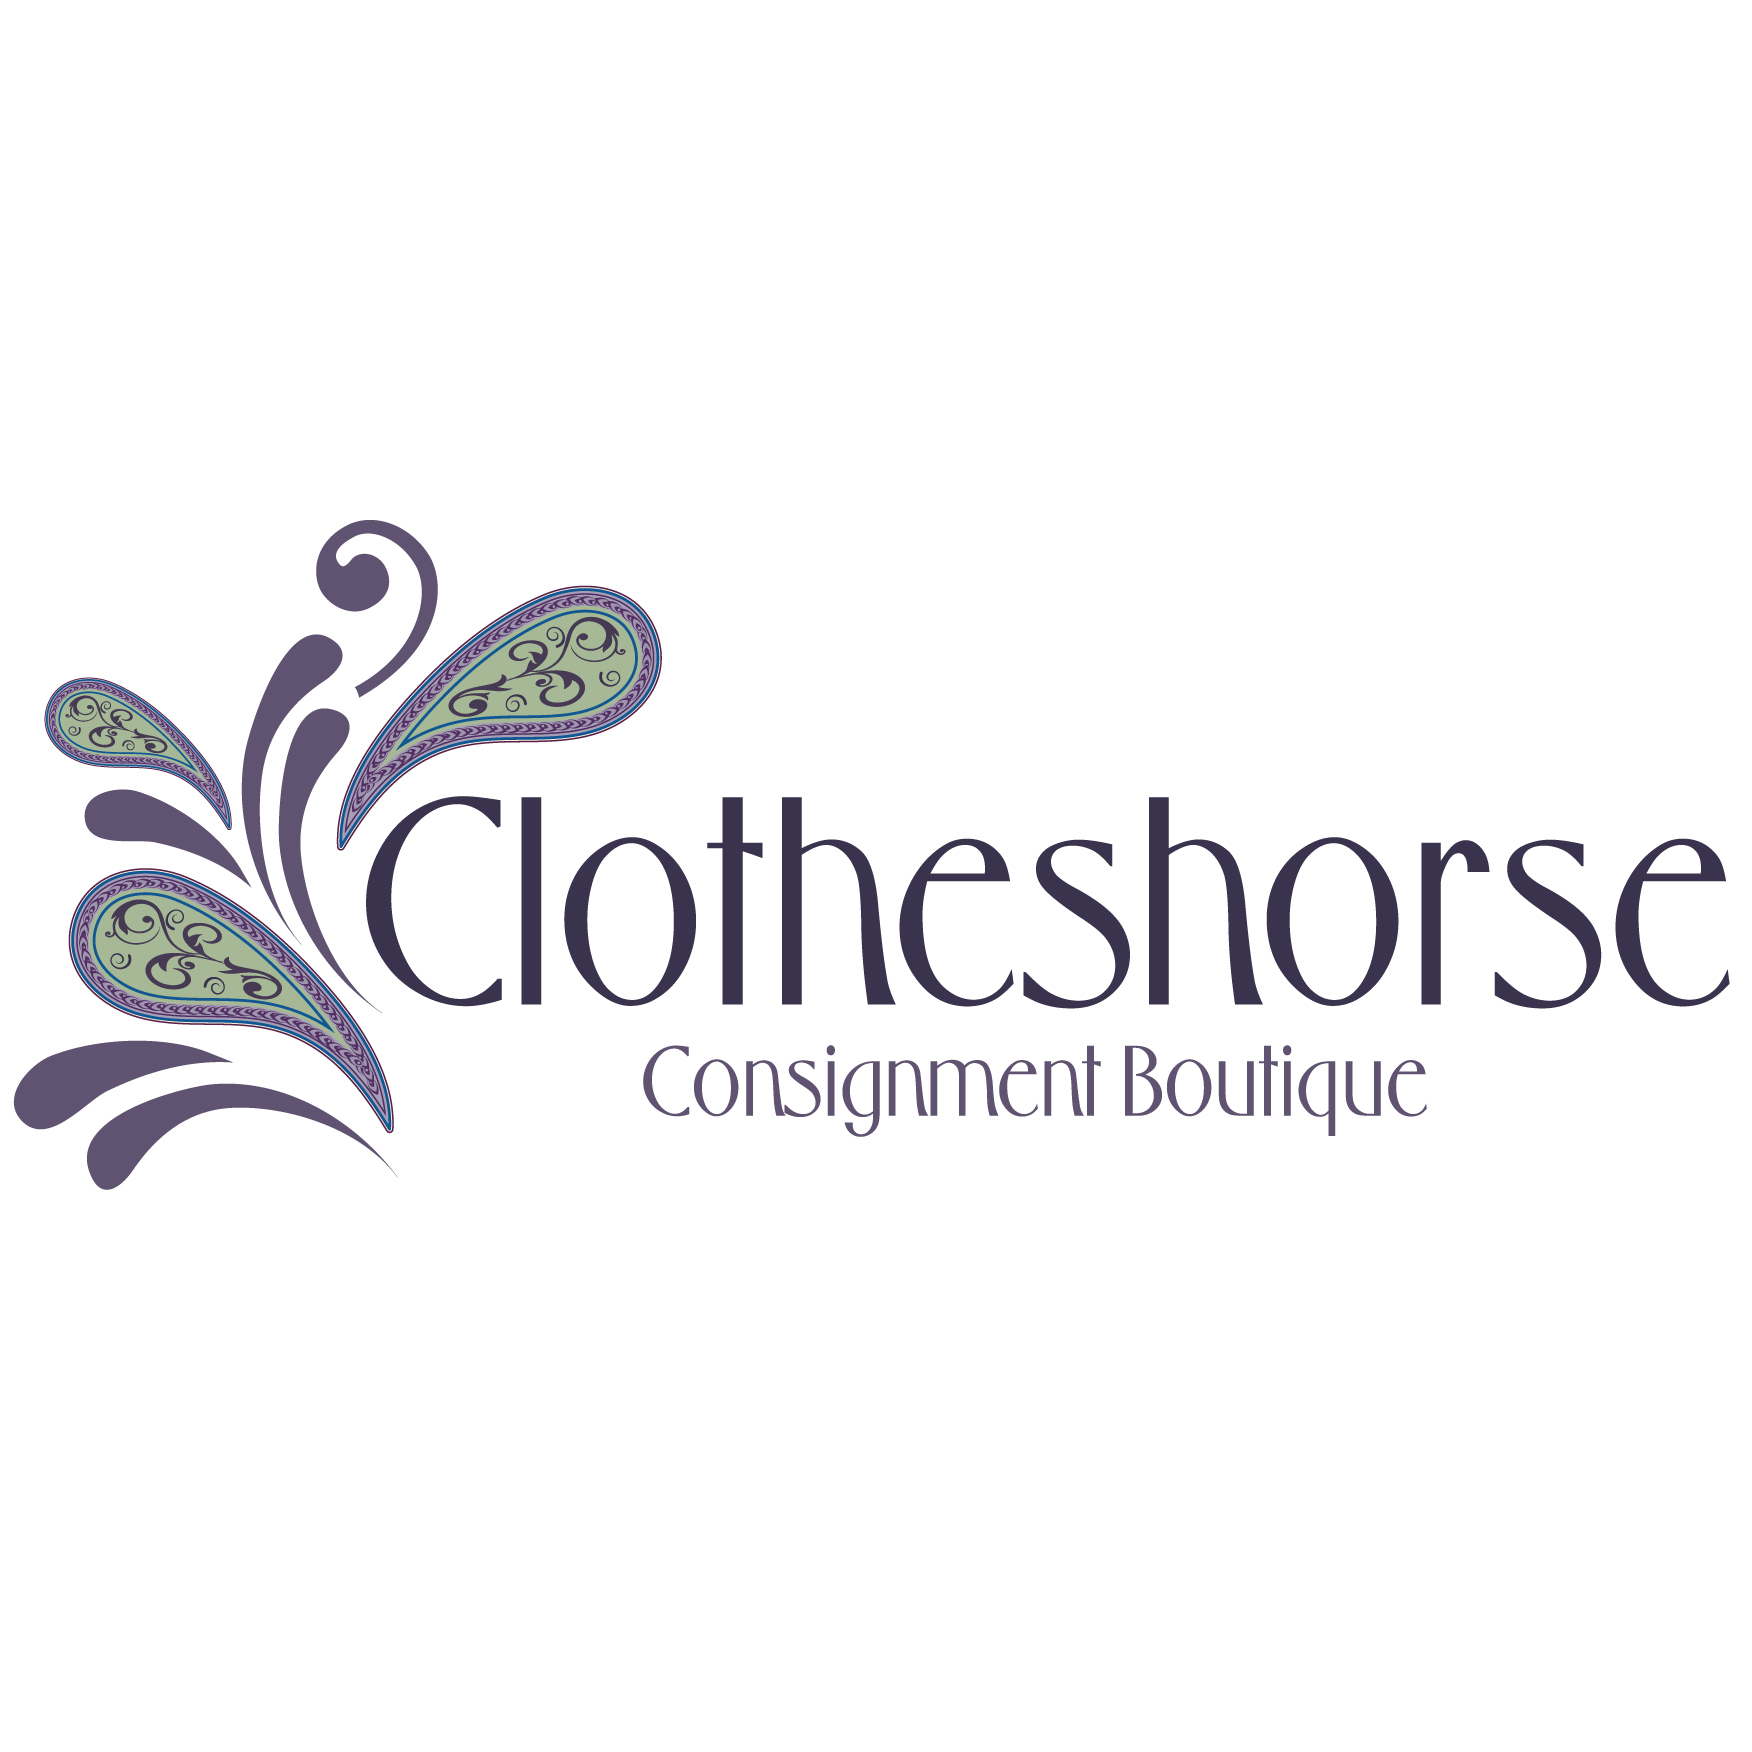 clotheshorse logo.jpg